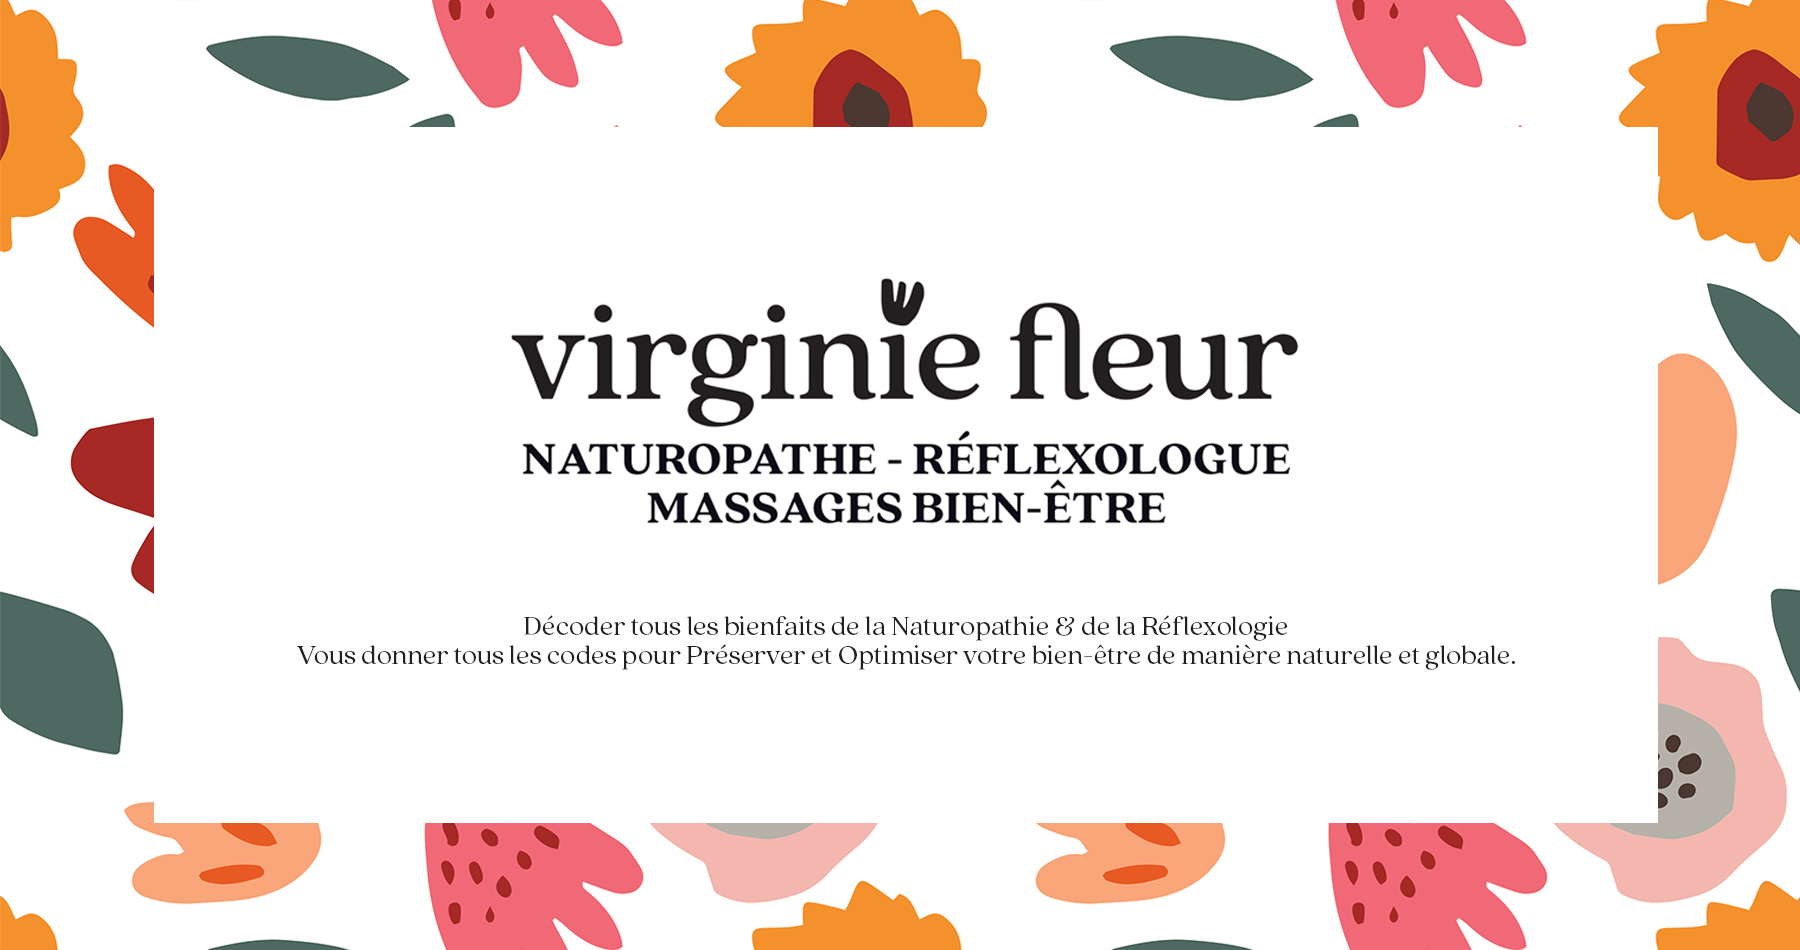 Virginie Fleur, naturopathe, reflexologue, massage bien-être